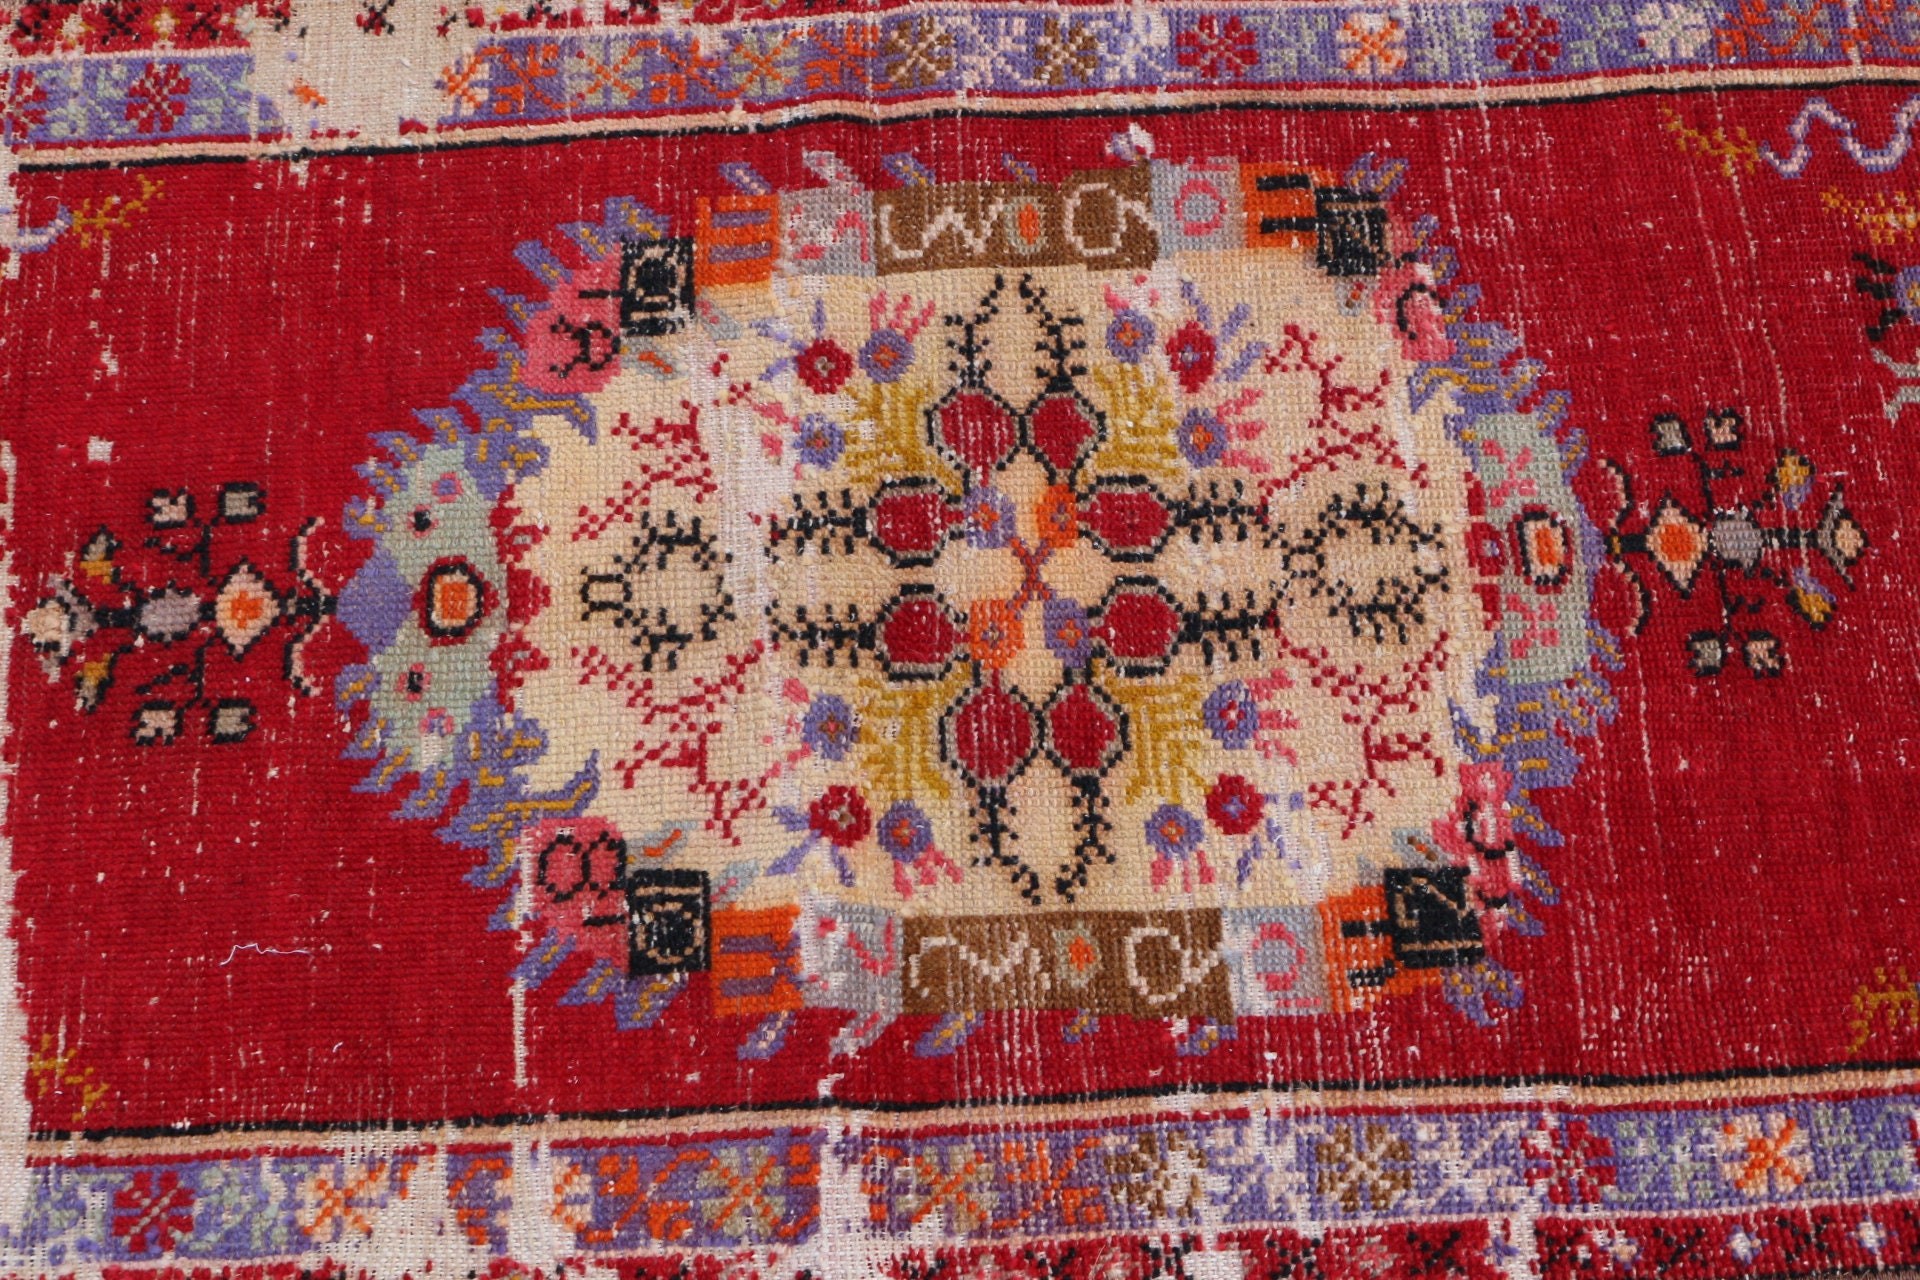 Vintage Rugs, Red Home Decor Rug, Moroccan Rugs, Turkish Rug, Bath Rug, Rugs for Door Mat, Floor Rug, Entry Rug, 2.5x5.2 ft Small Rug